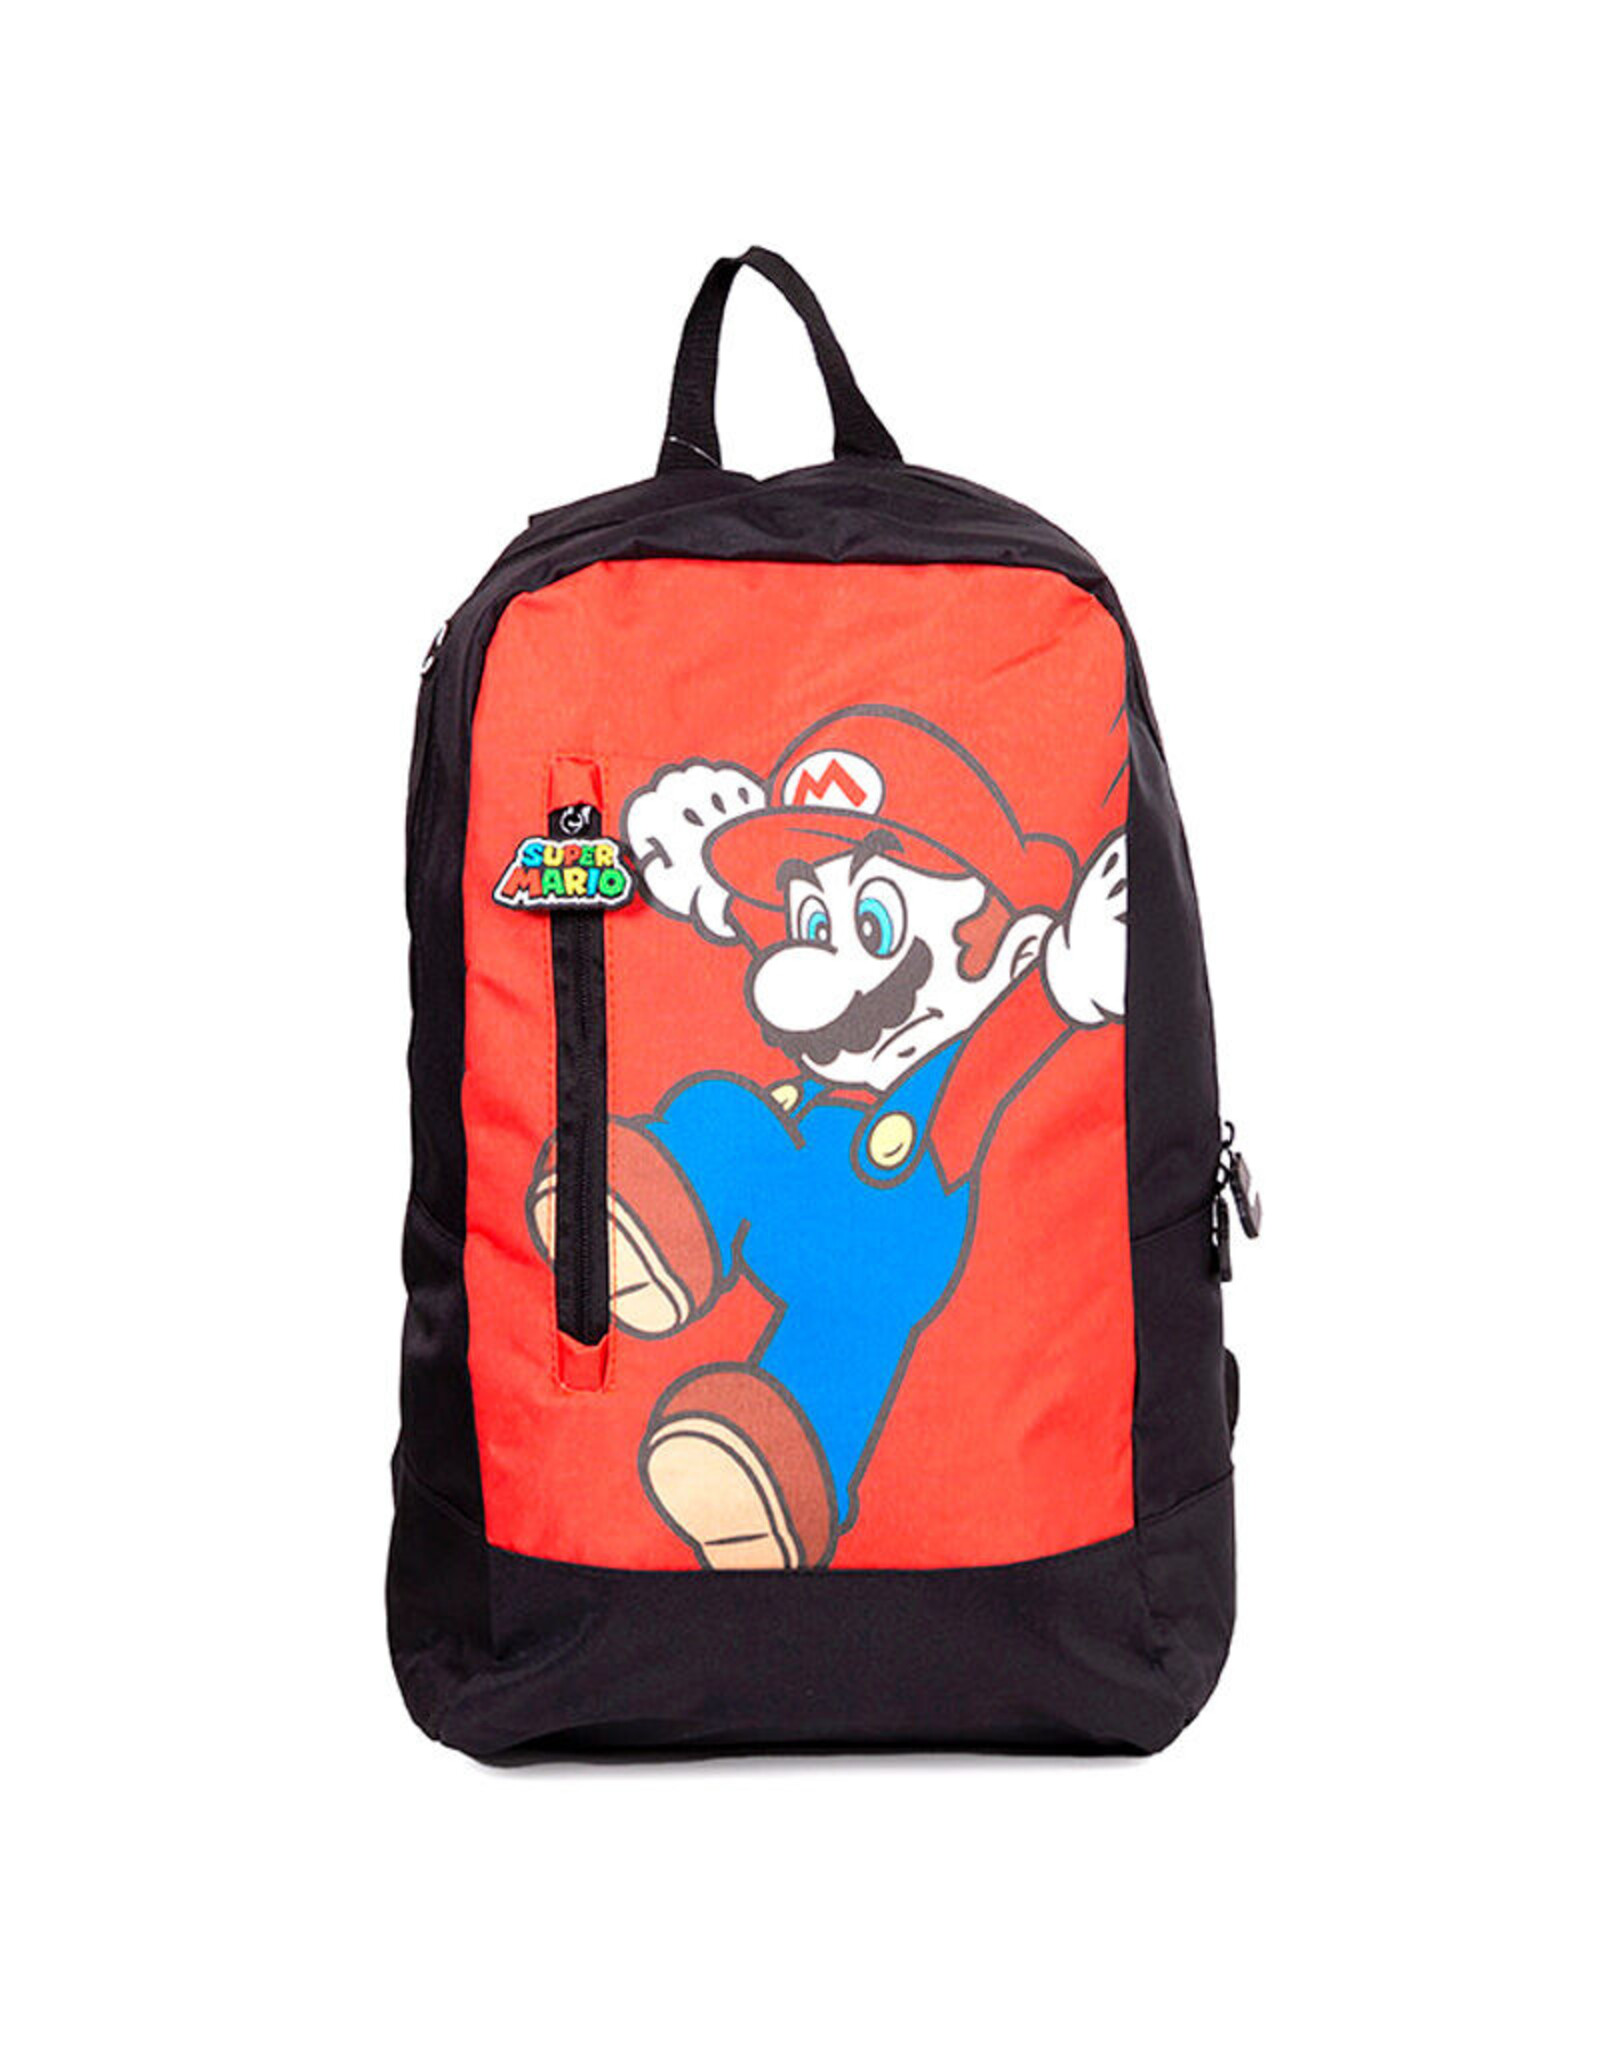 Nintendo Merchandise bags - Super Mario Bros Mario backpack 40cm